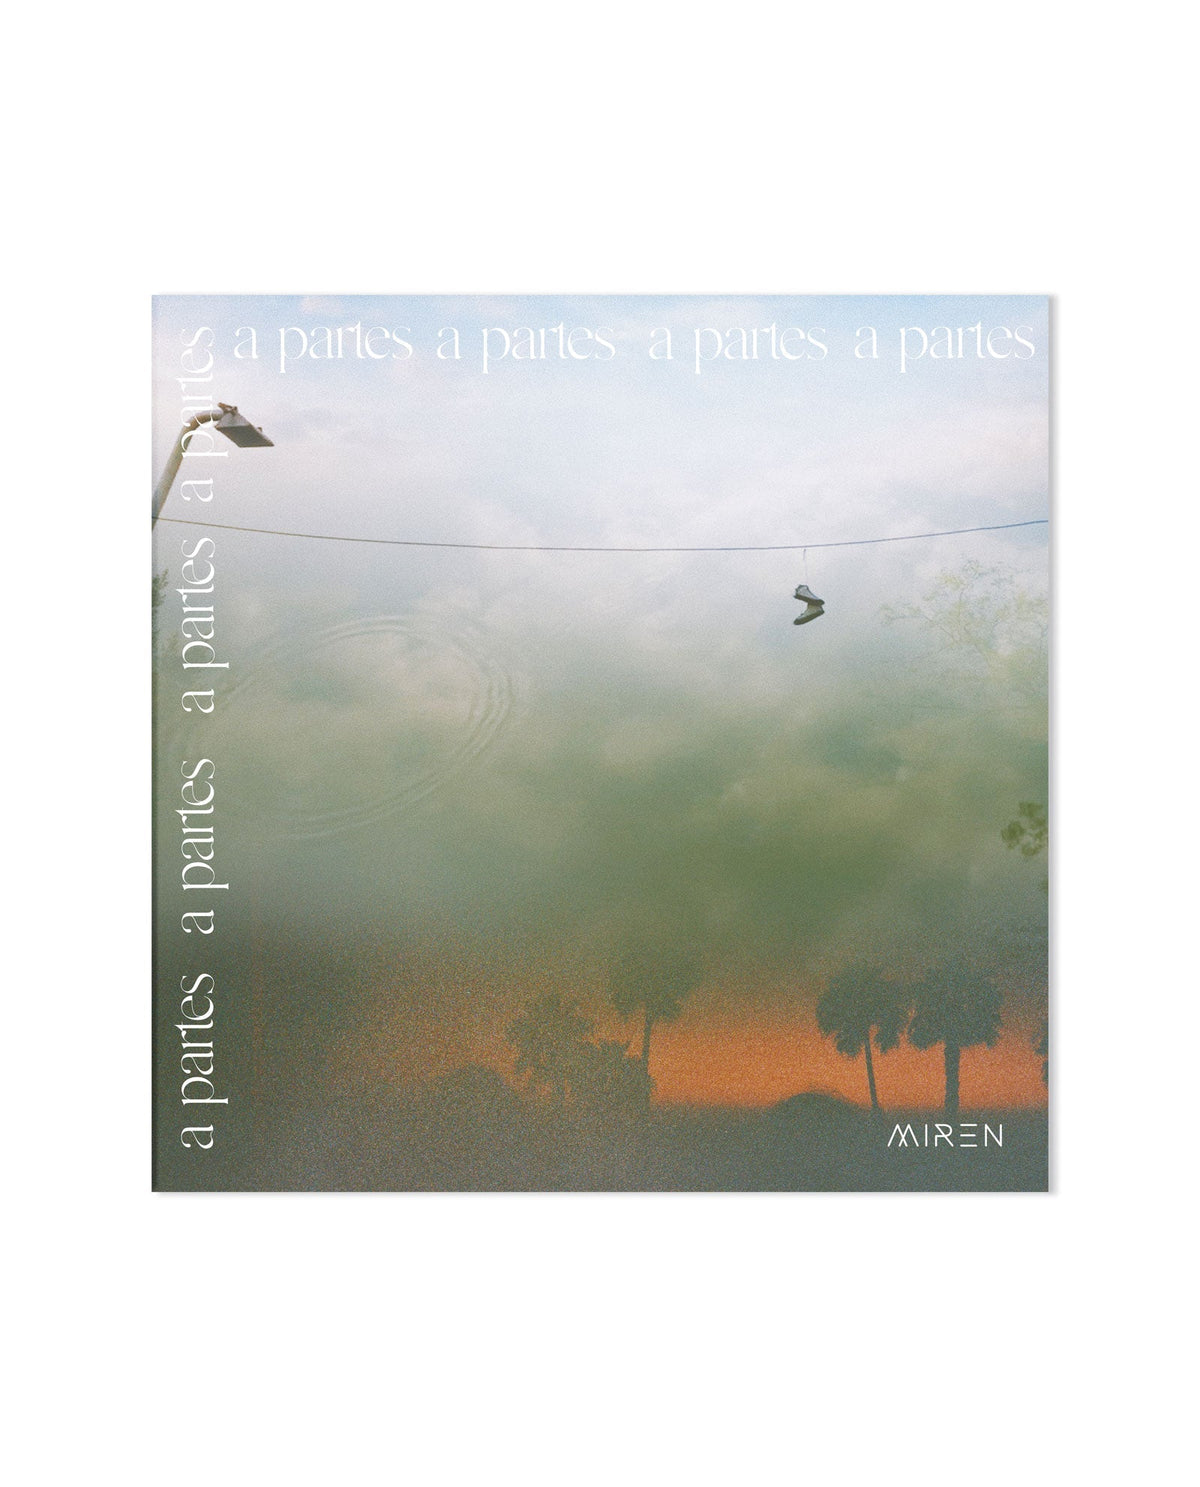 Miren - A Partes (CD) - Rocktud - Miren